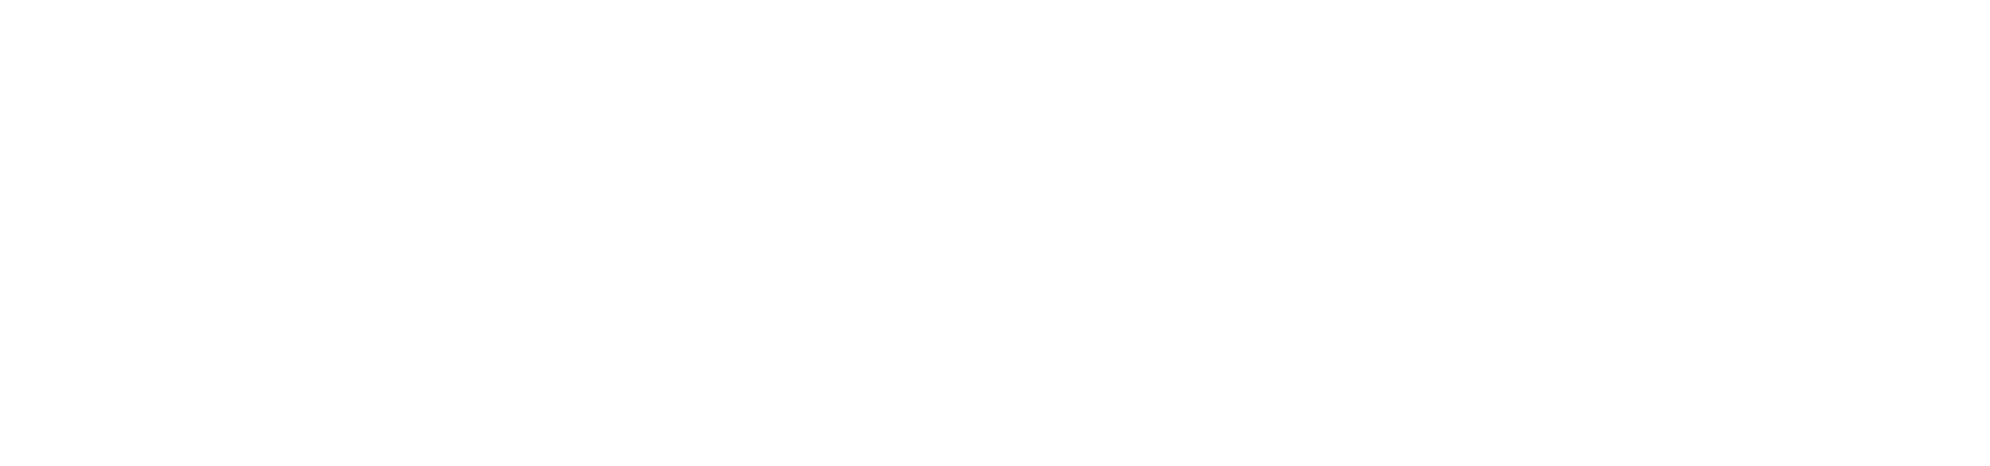 Black Rock Technologies